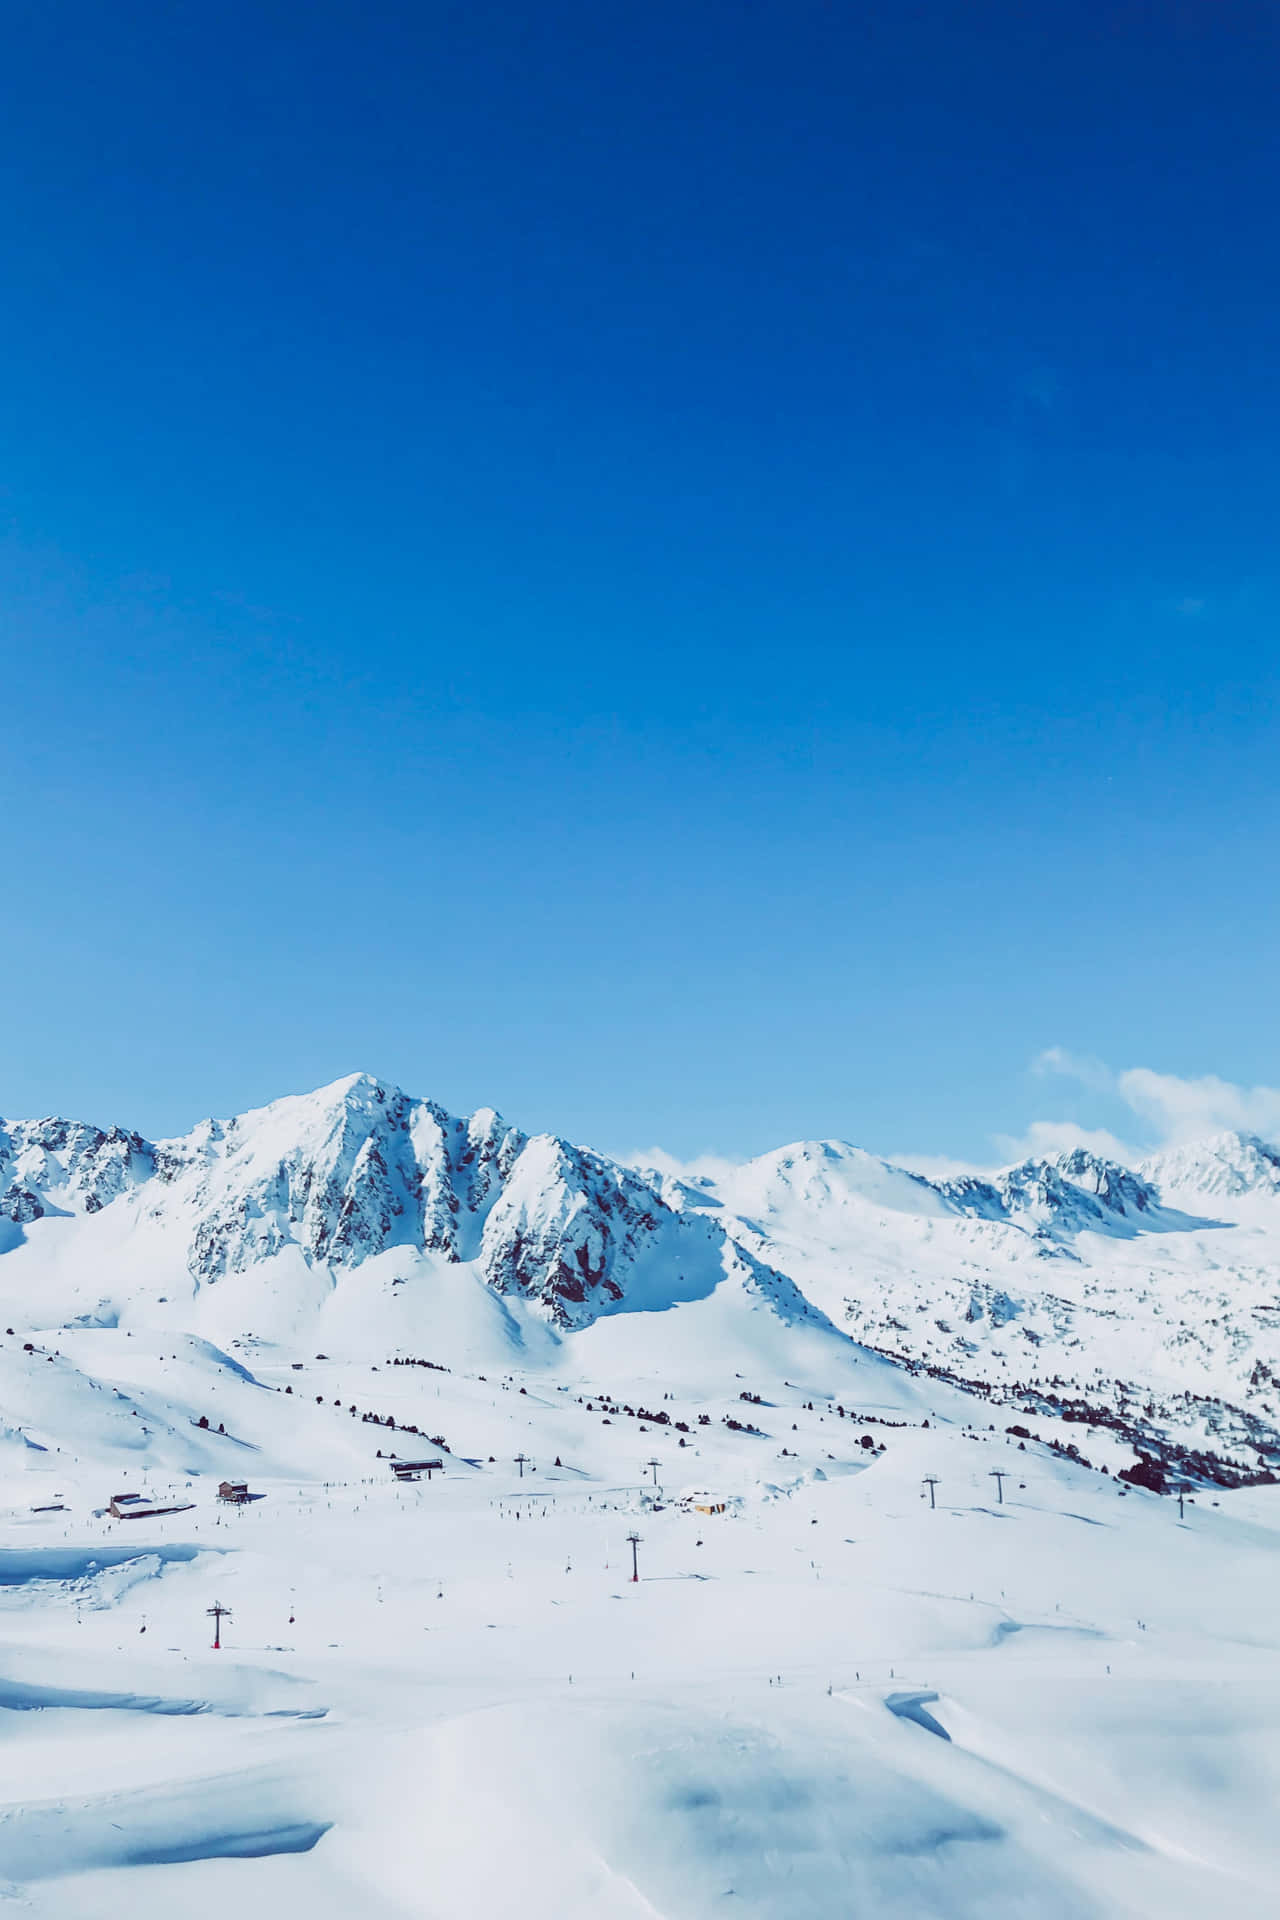 Take in the Splendid Views at a Ski Mountain Wallpaper